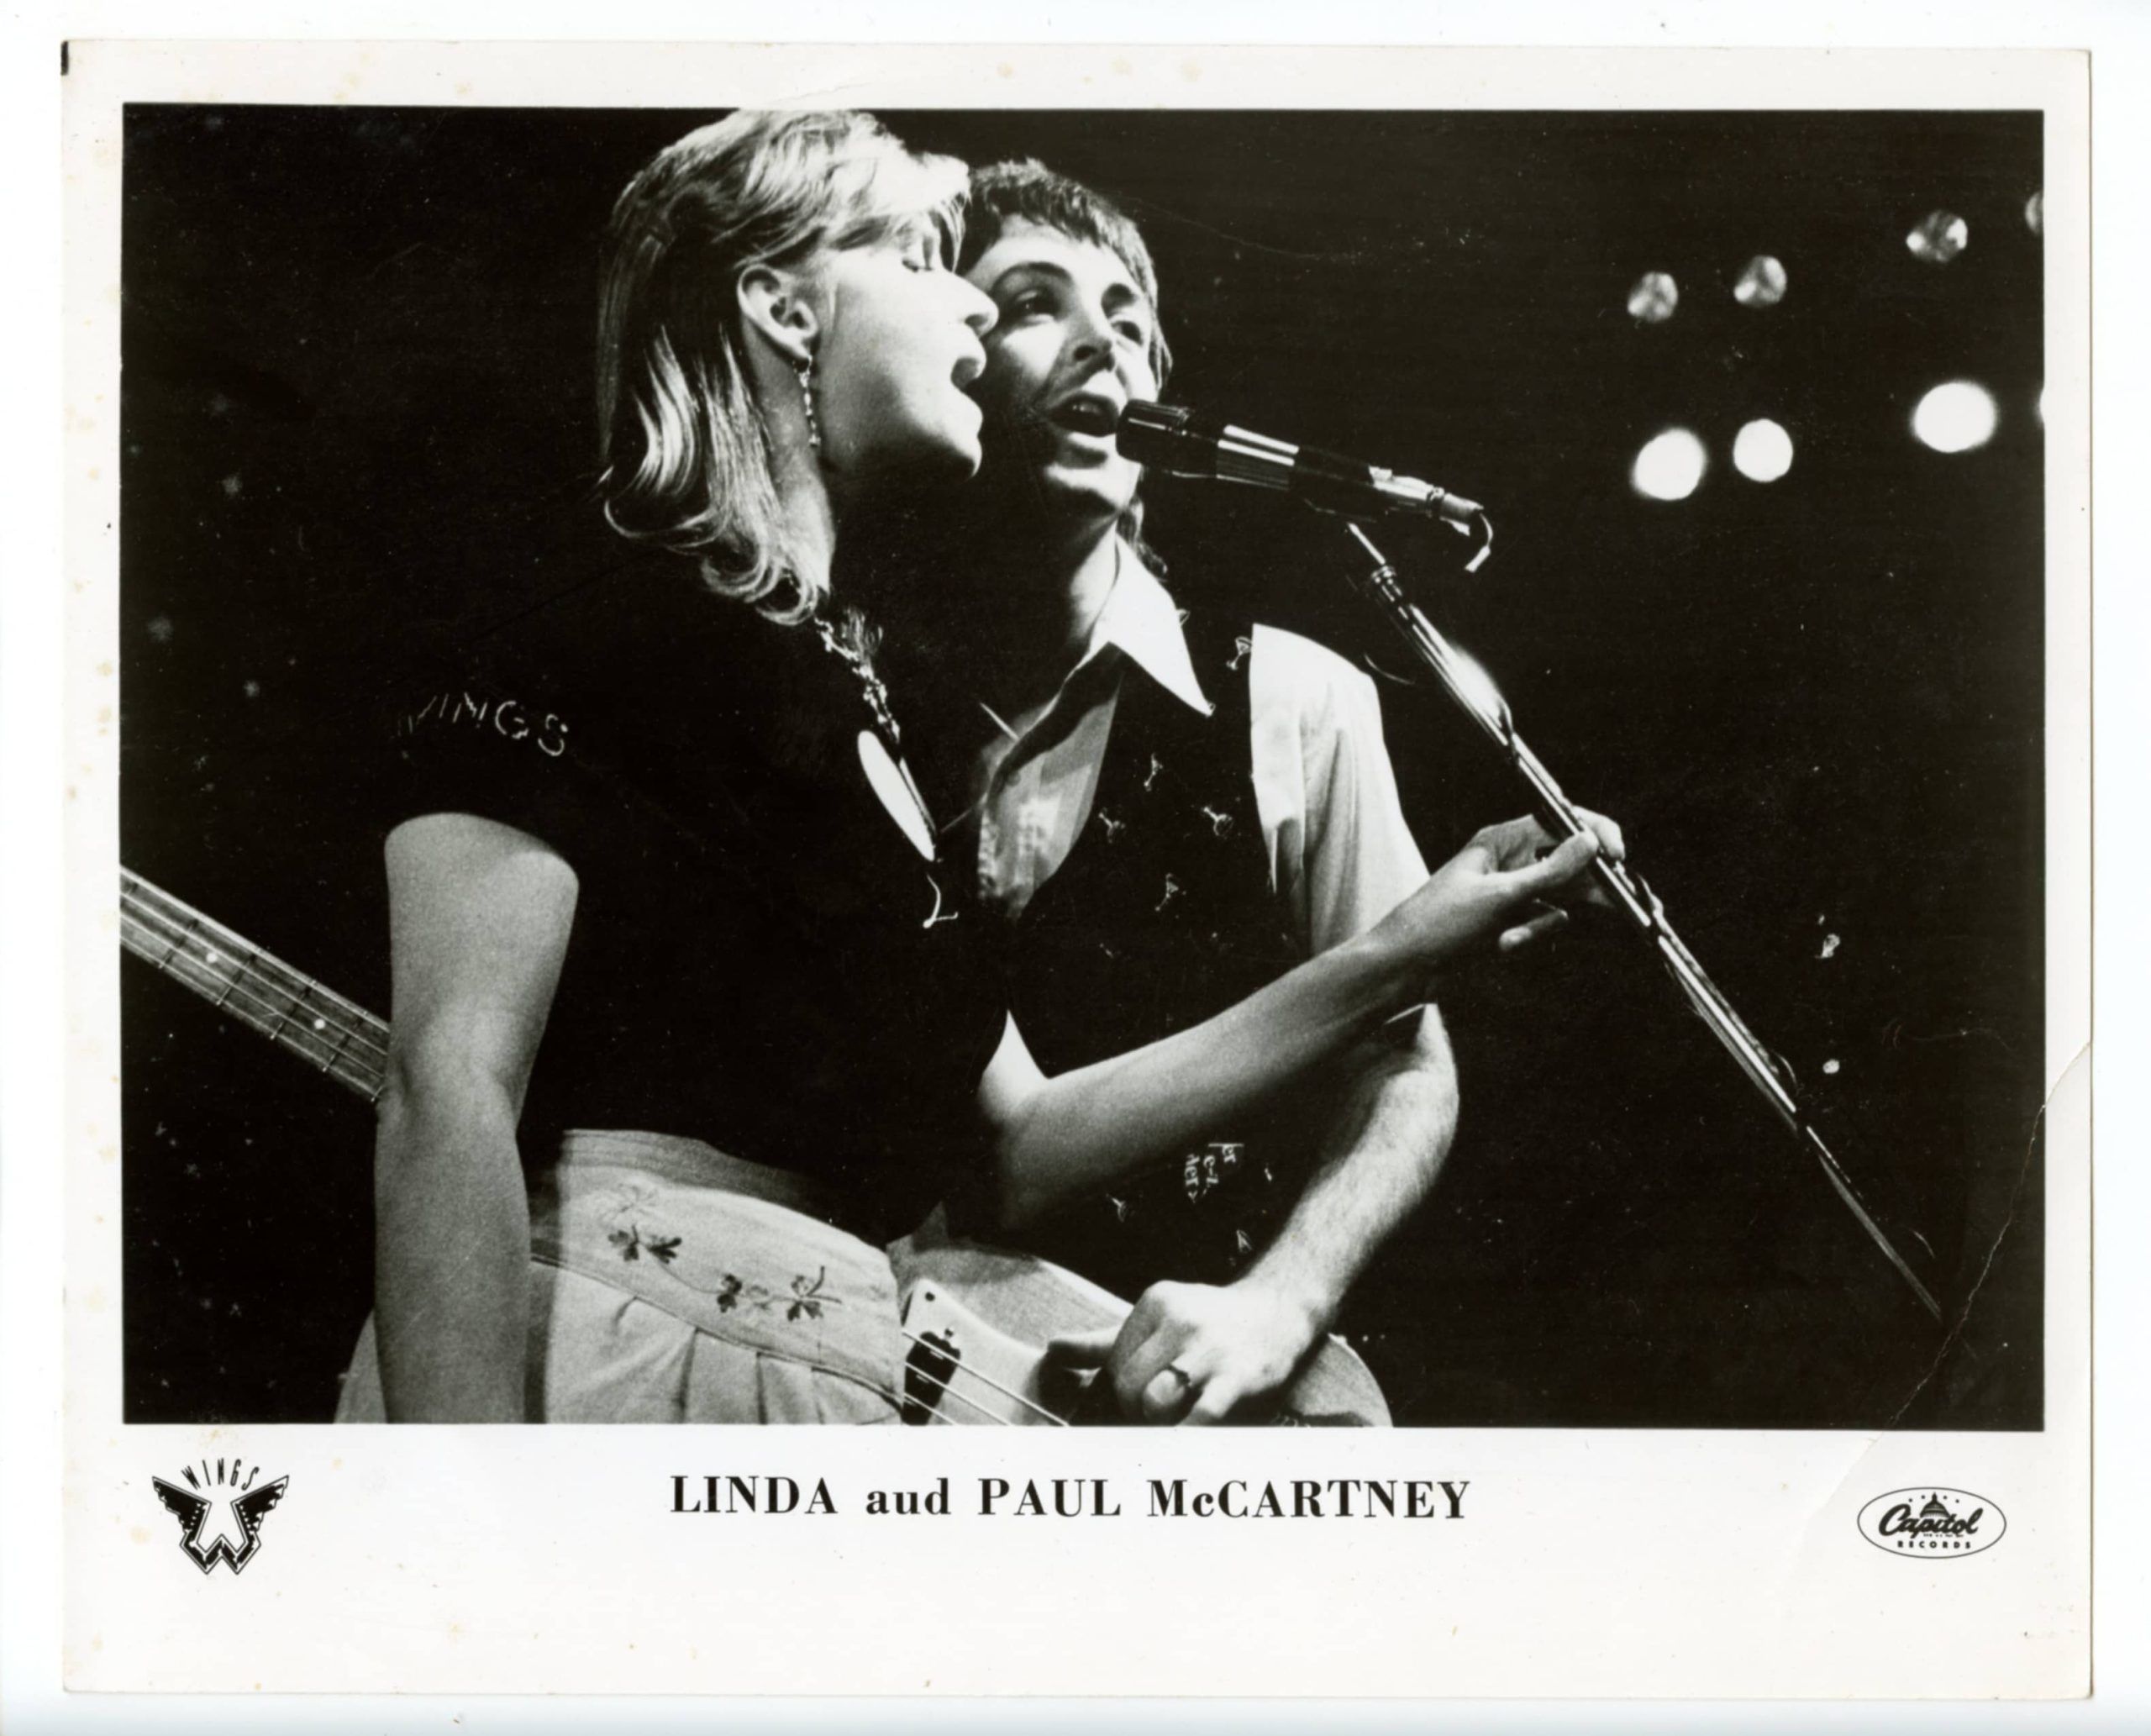 Paul McCartney and Linda Photo 1970s Capitol Records